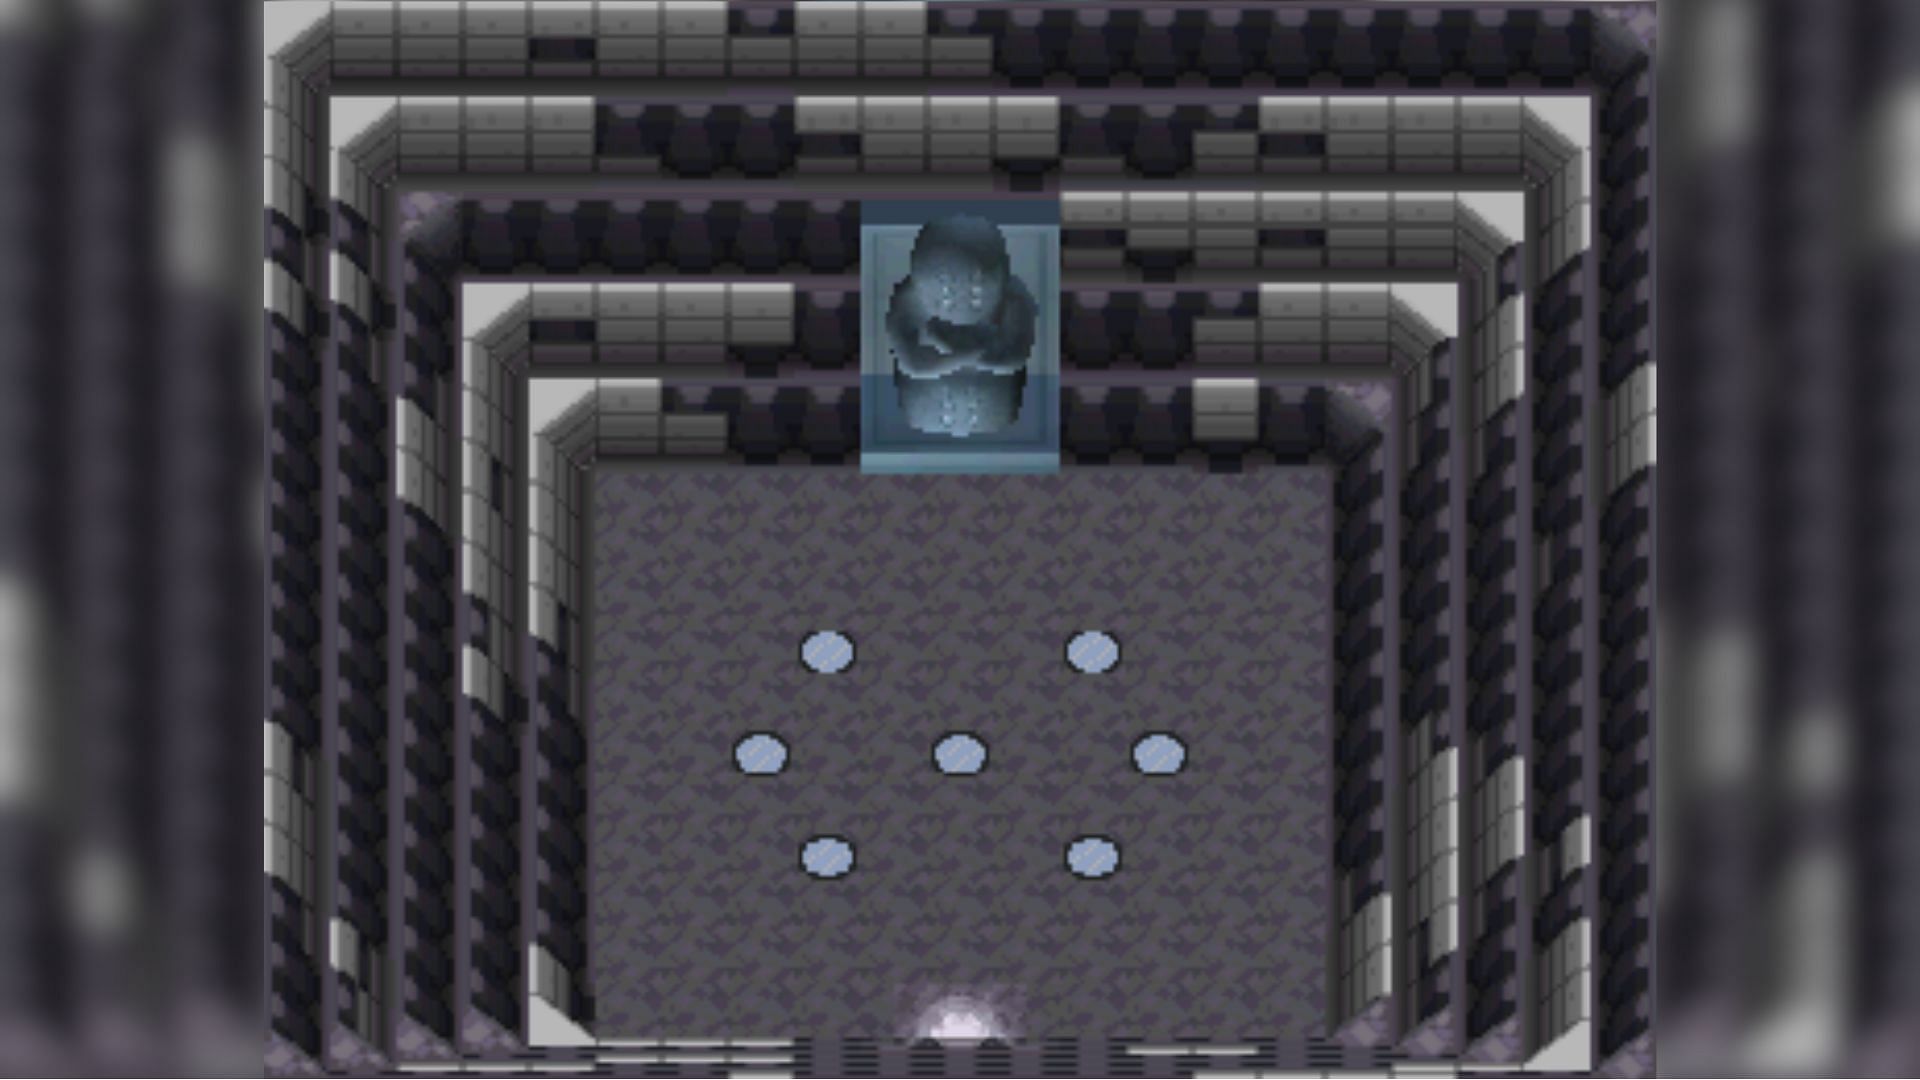 Iron Ruins in the game (Image via The Pokemon Company)